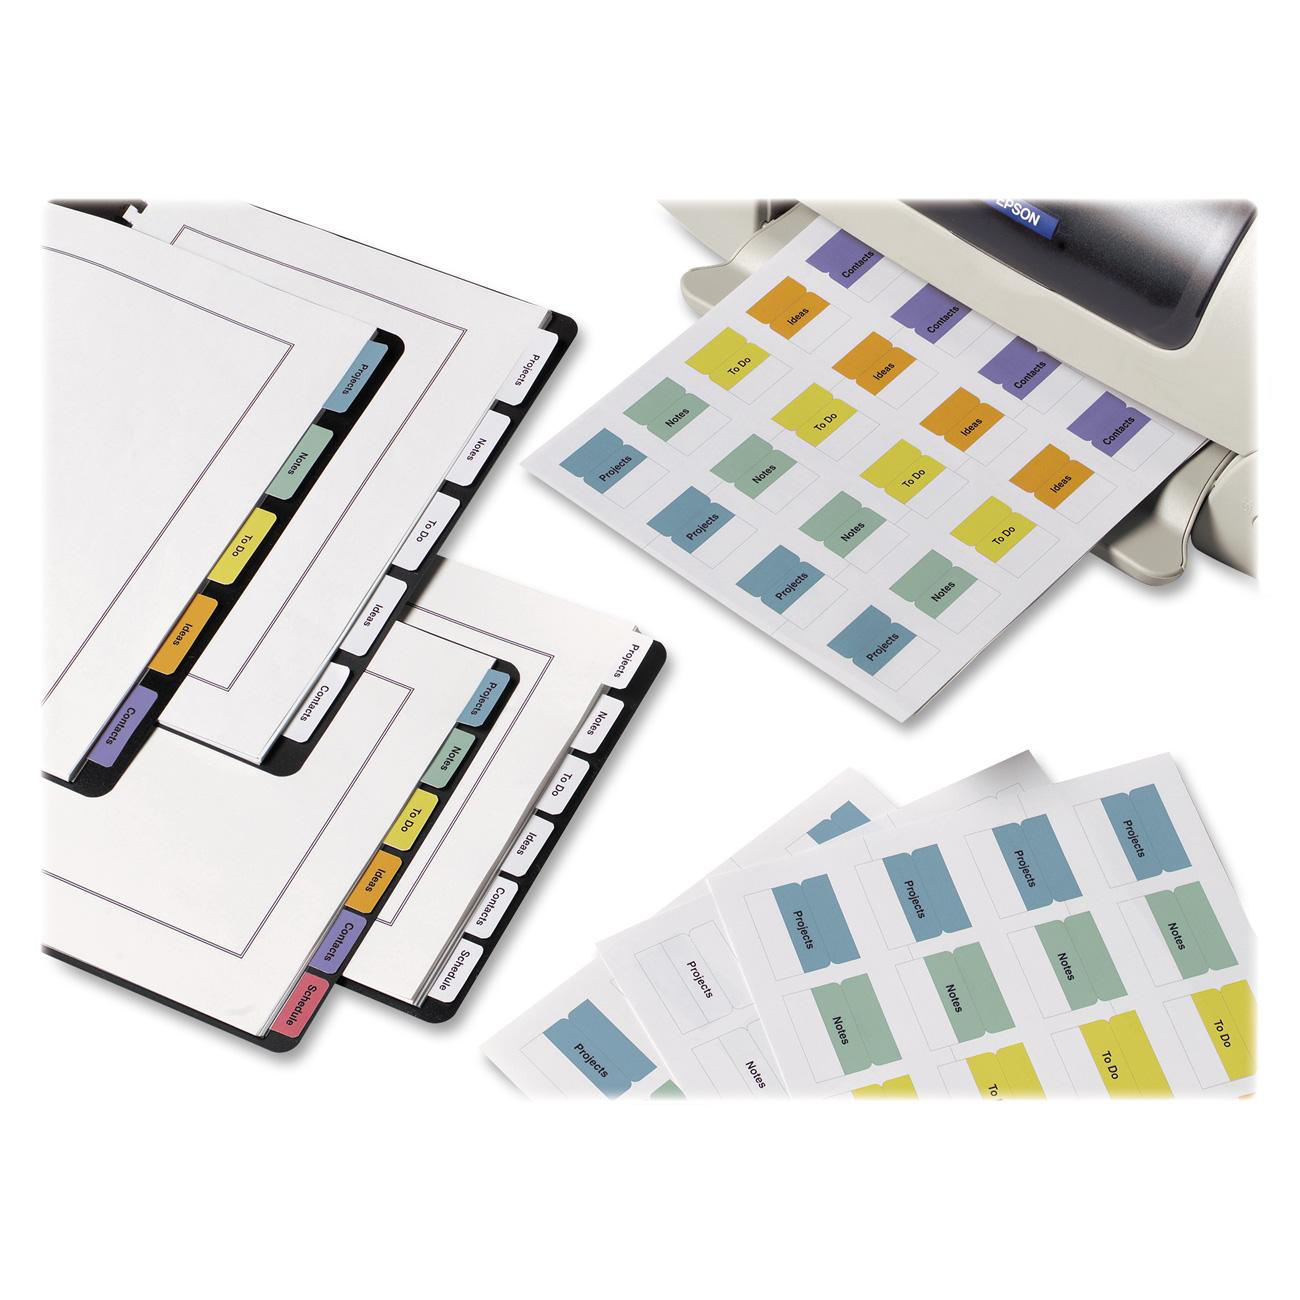 avery-printable-self-adhesive-tab-ld-products